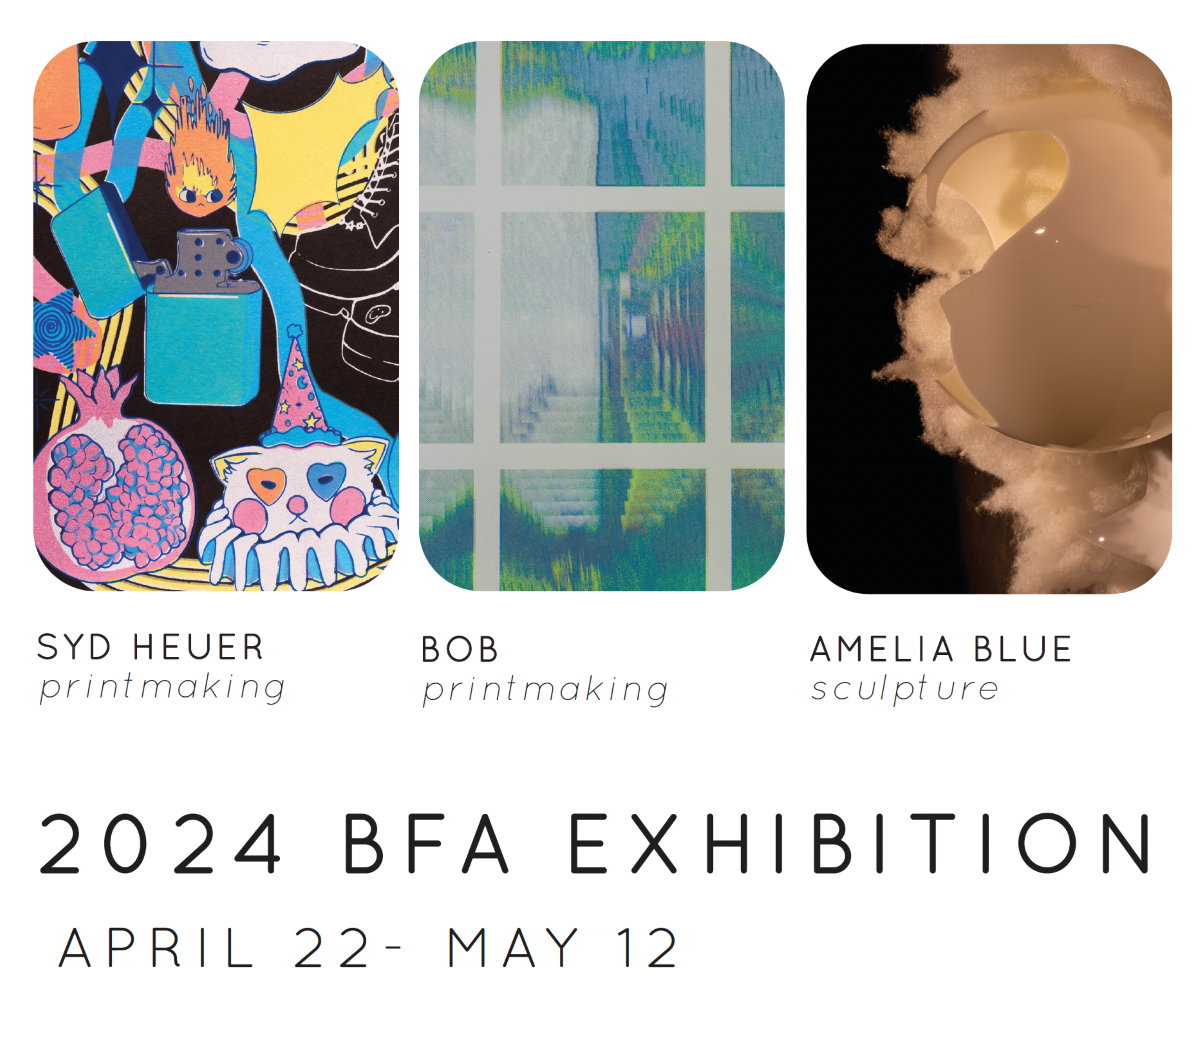 2024 BFA Exhibition April 22 - May 12: Syd Heuer (printmaking), Bob (printmaking) and Amelia Blue (sculpture).